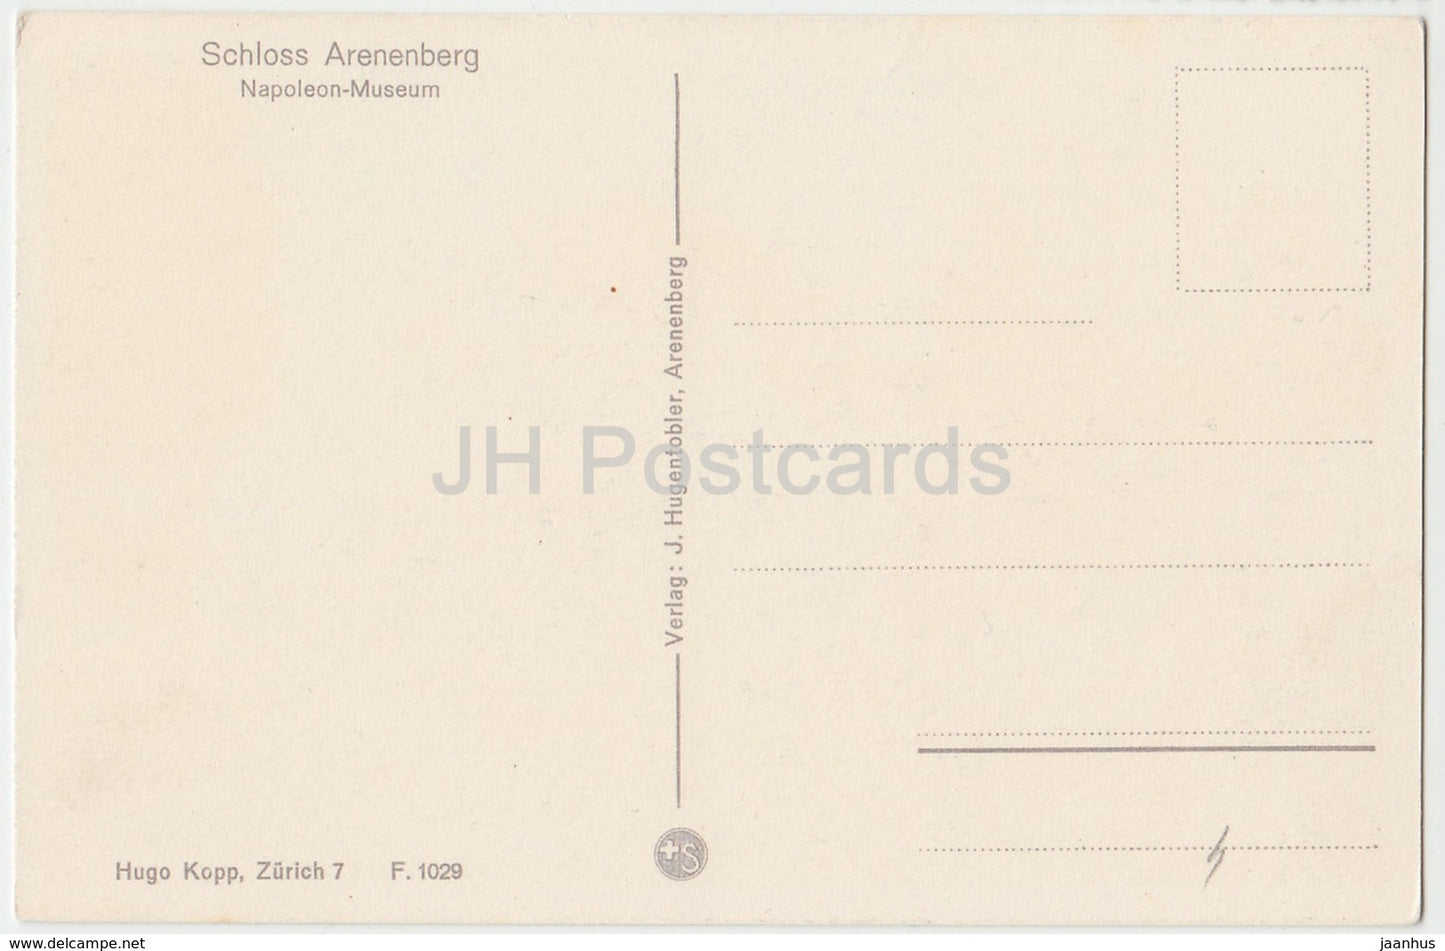 Schloss Arenenberg - Napoleon-Museum - castle - museum - Switzerland - old postcard - unused